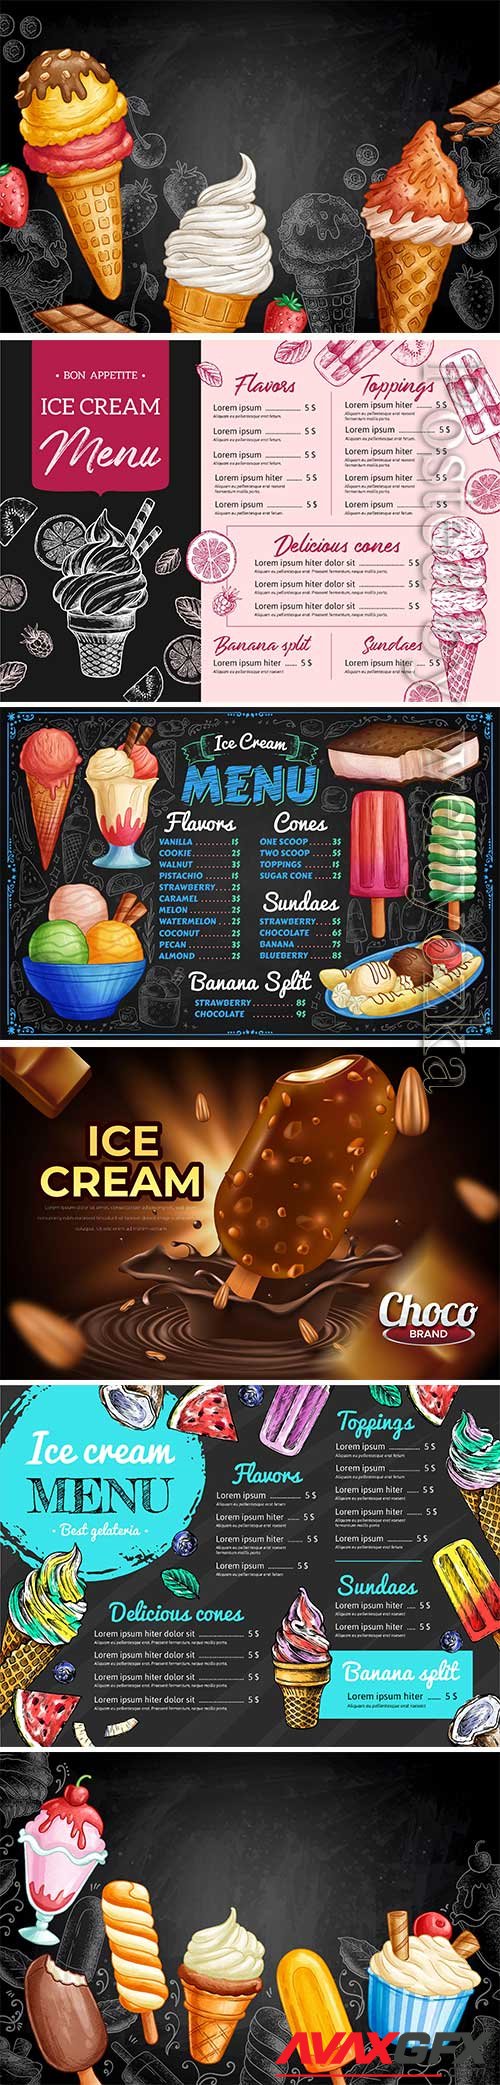 Hand drawn style ice cream blackboard vector background